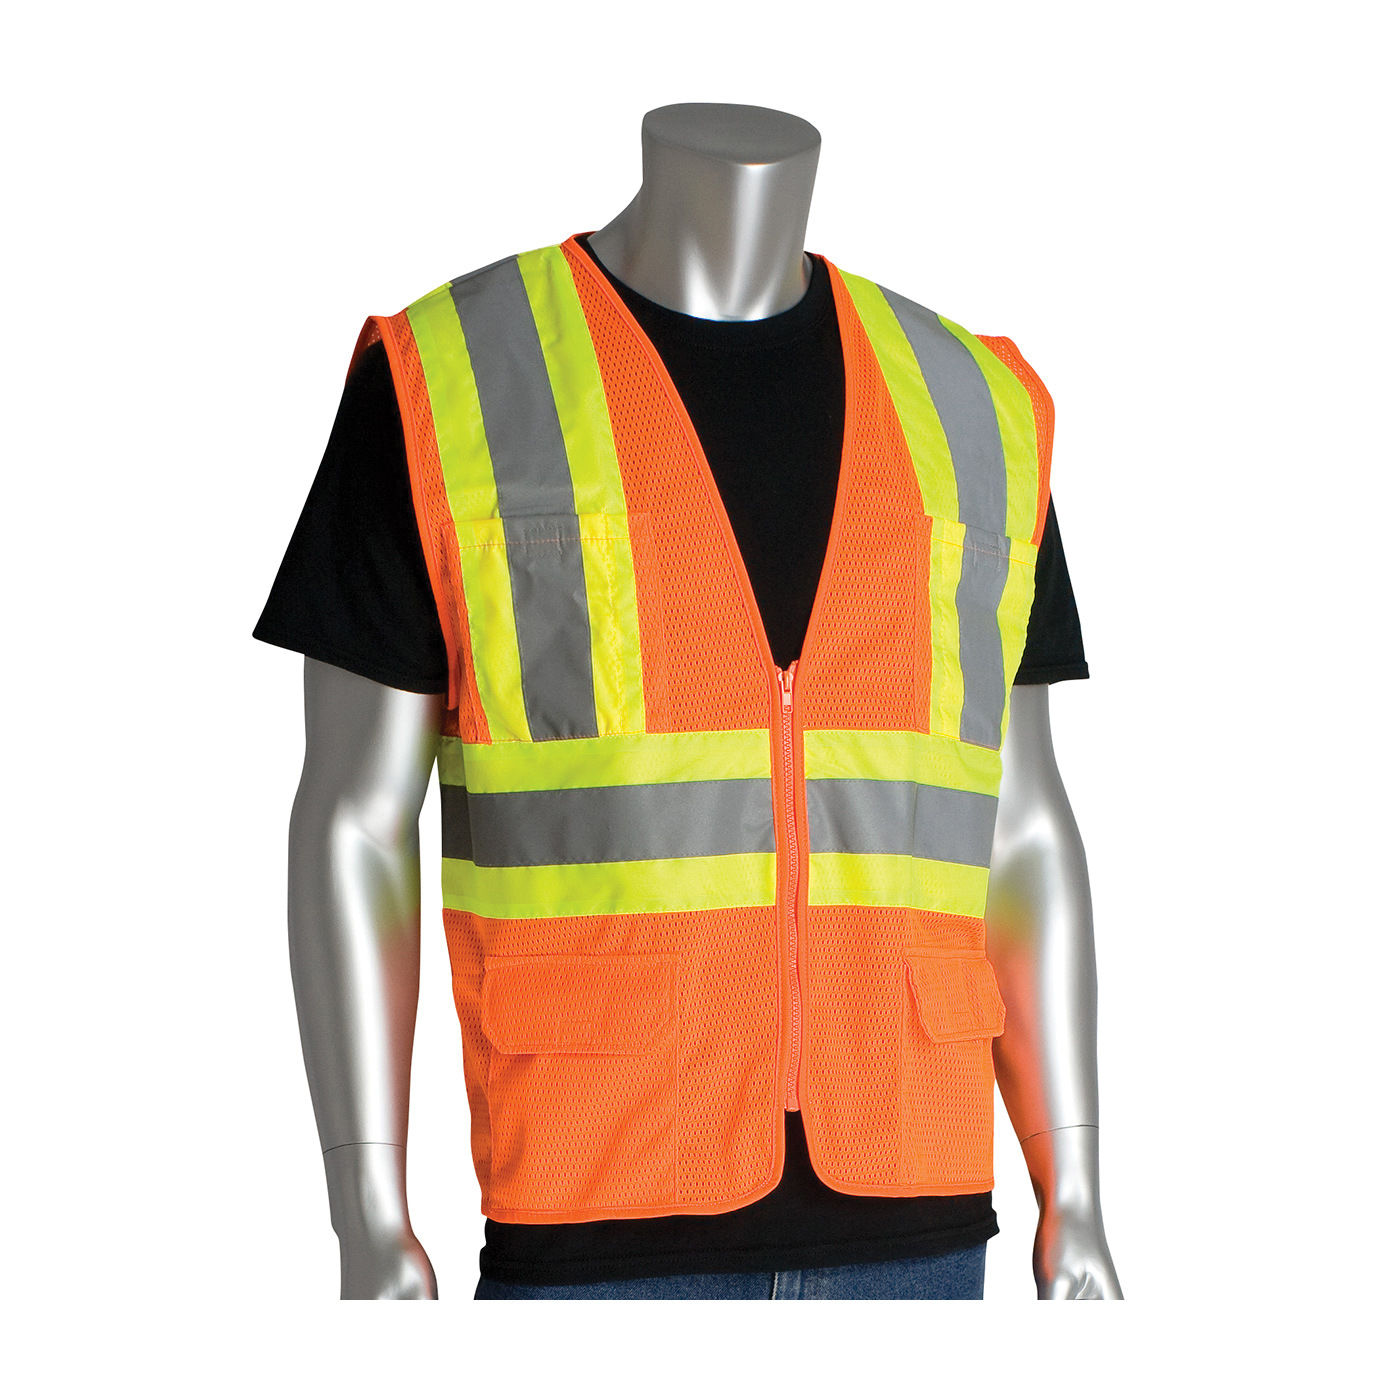 PIP® 302-MVZPOR-XL 2-Tone Safety Vest, XL, Hi-Viz Orange, Polyester Mesh, Zipper Closure, 6 Pockets, ANSI Class: Class 2, Specifications Met: ANSI 107 Type R